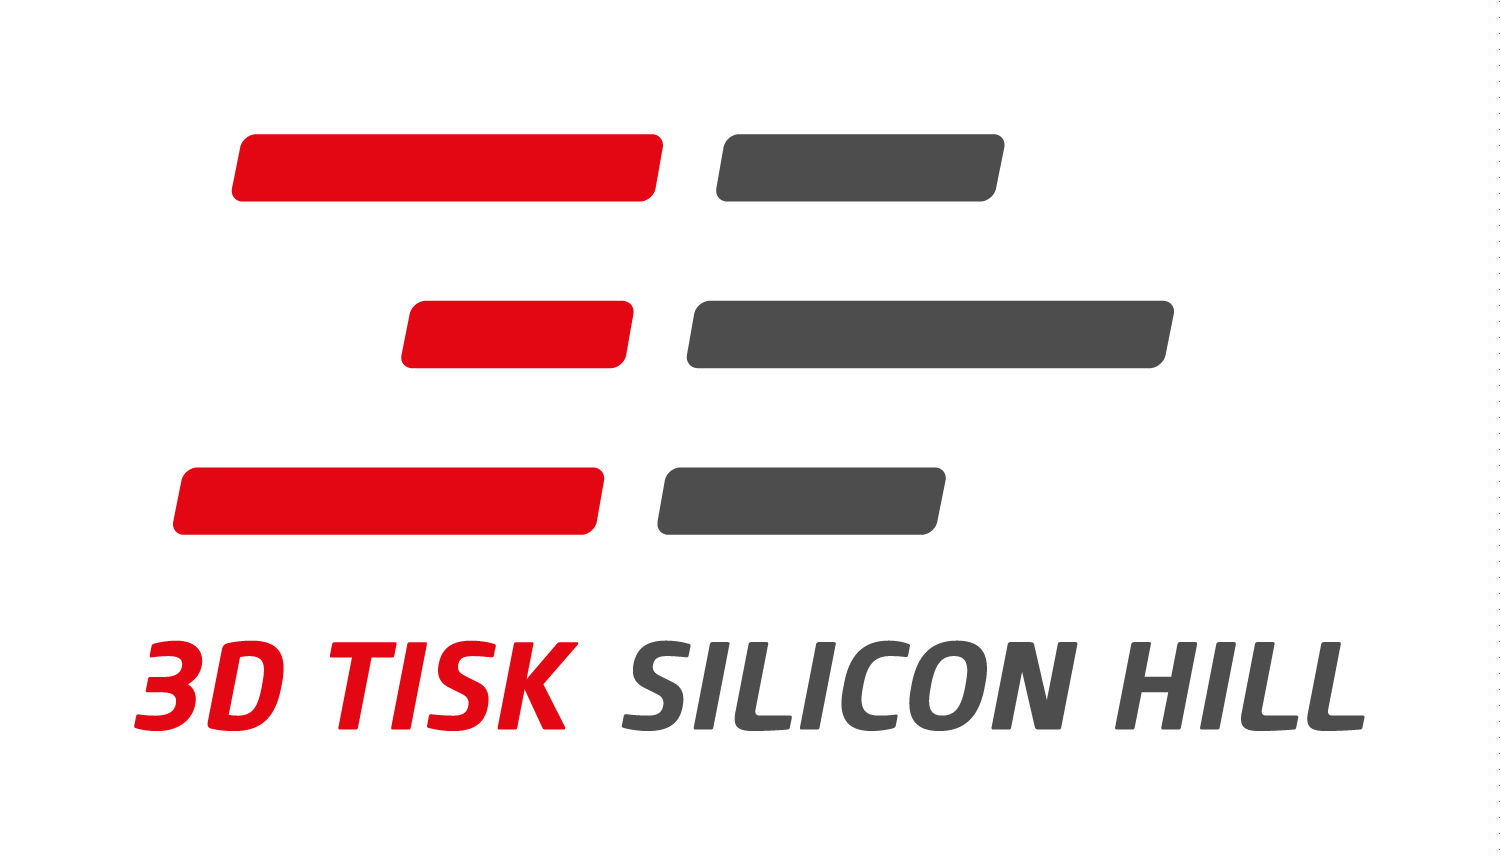 3D tisk Silicon Hill logo-3d-tisk-silicon-hill